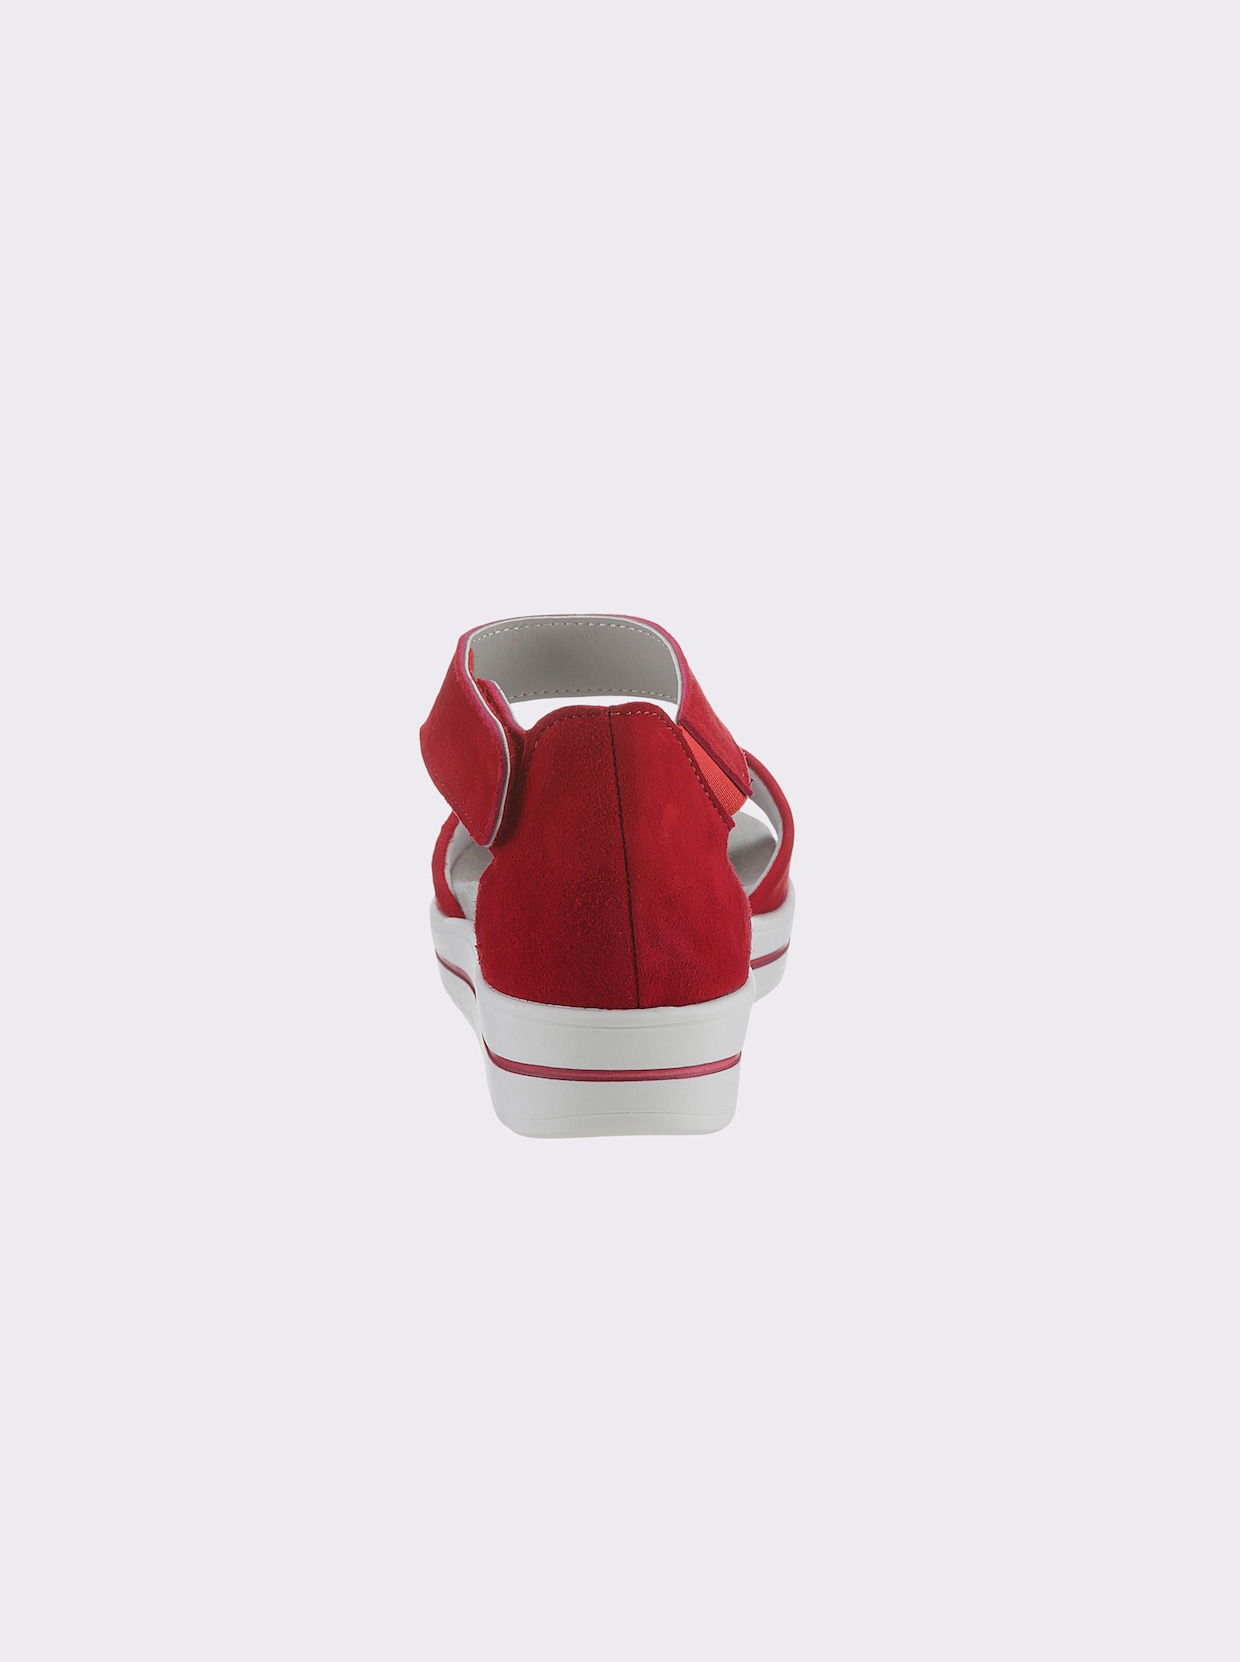 airsoft modern+ Sandalen - rood